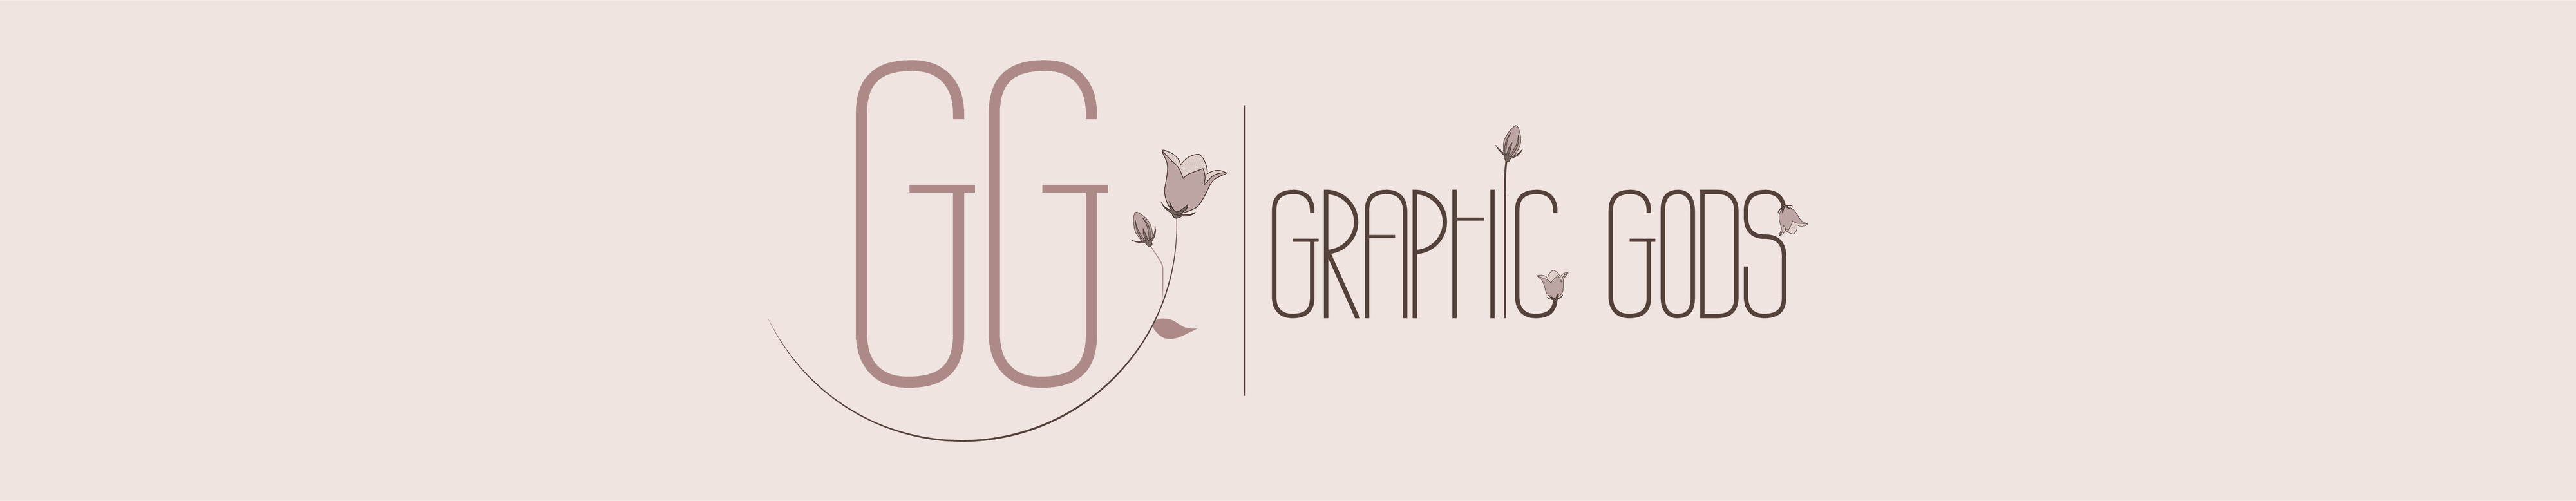 GraphicGods banner